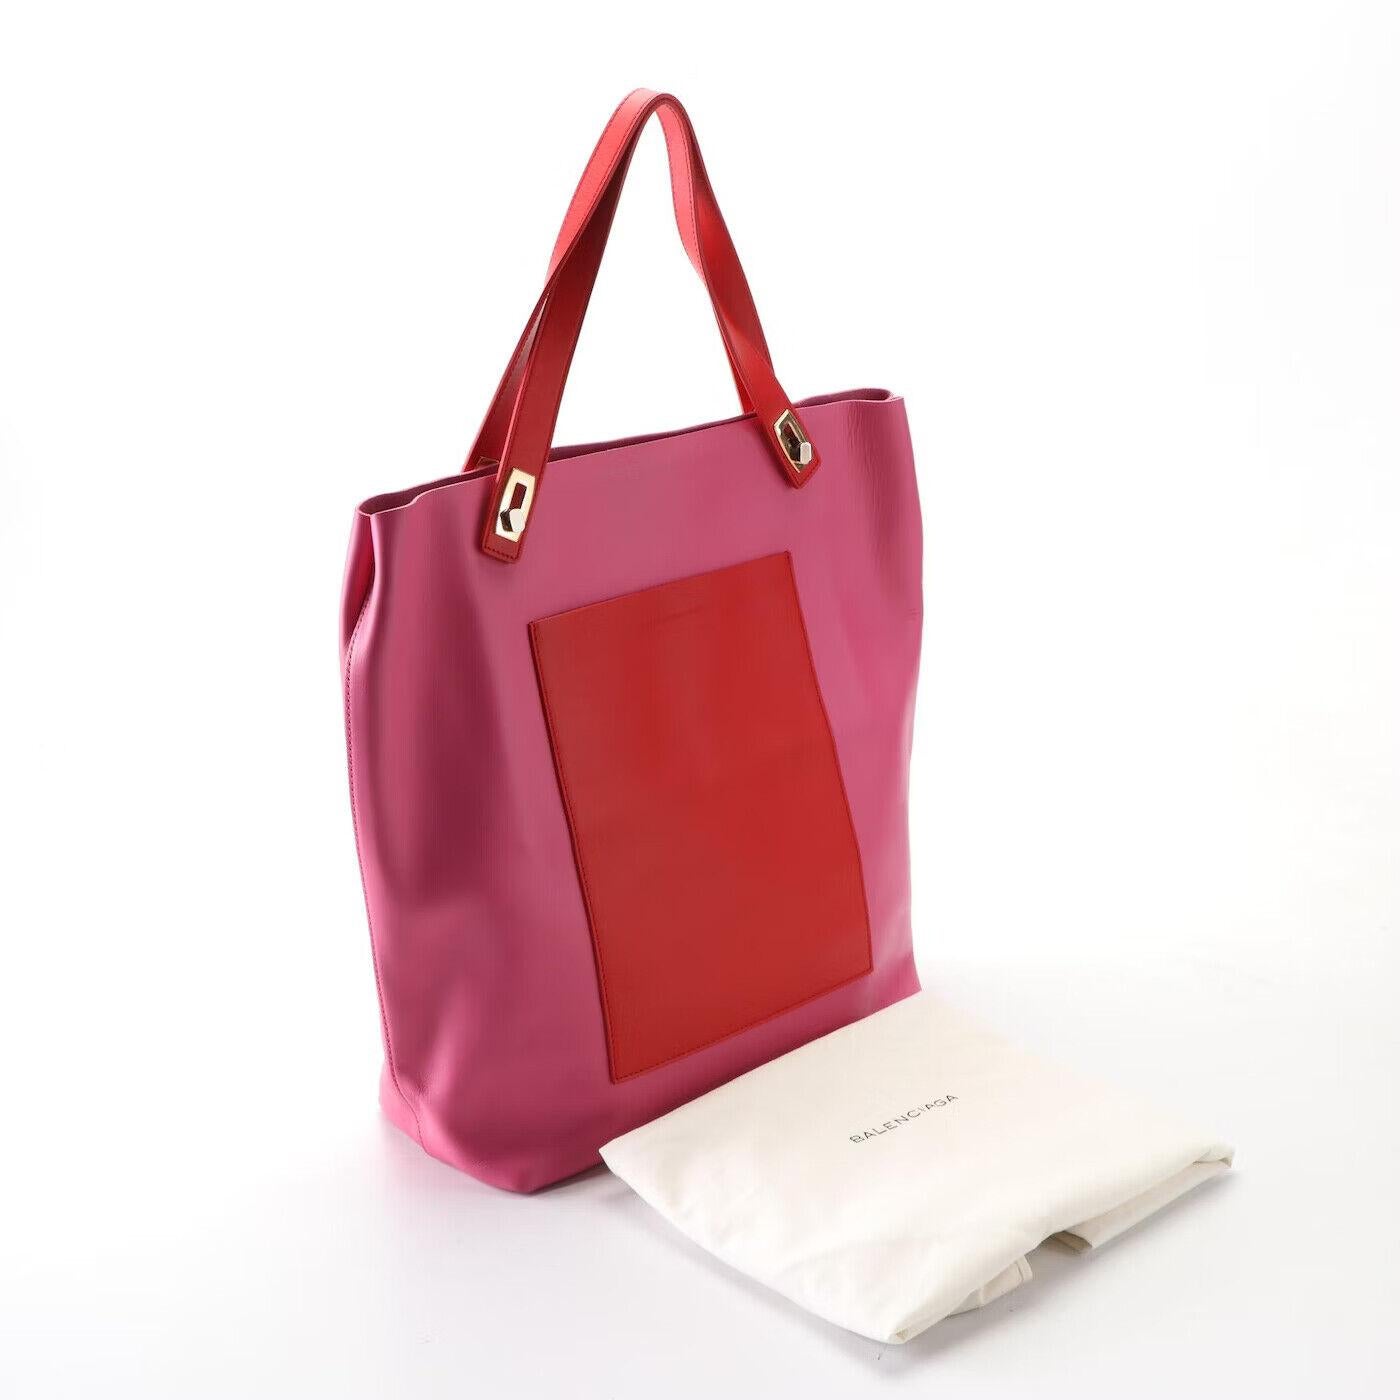 Umwerfende Balenciaga-Tasche
 Like New Store Display

Kalbsleder
Rosa & Rot

Kollektion Frühjahr/Sommer 2013
2013 Datum Code

12,0